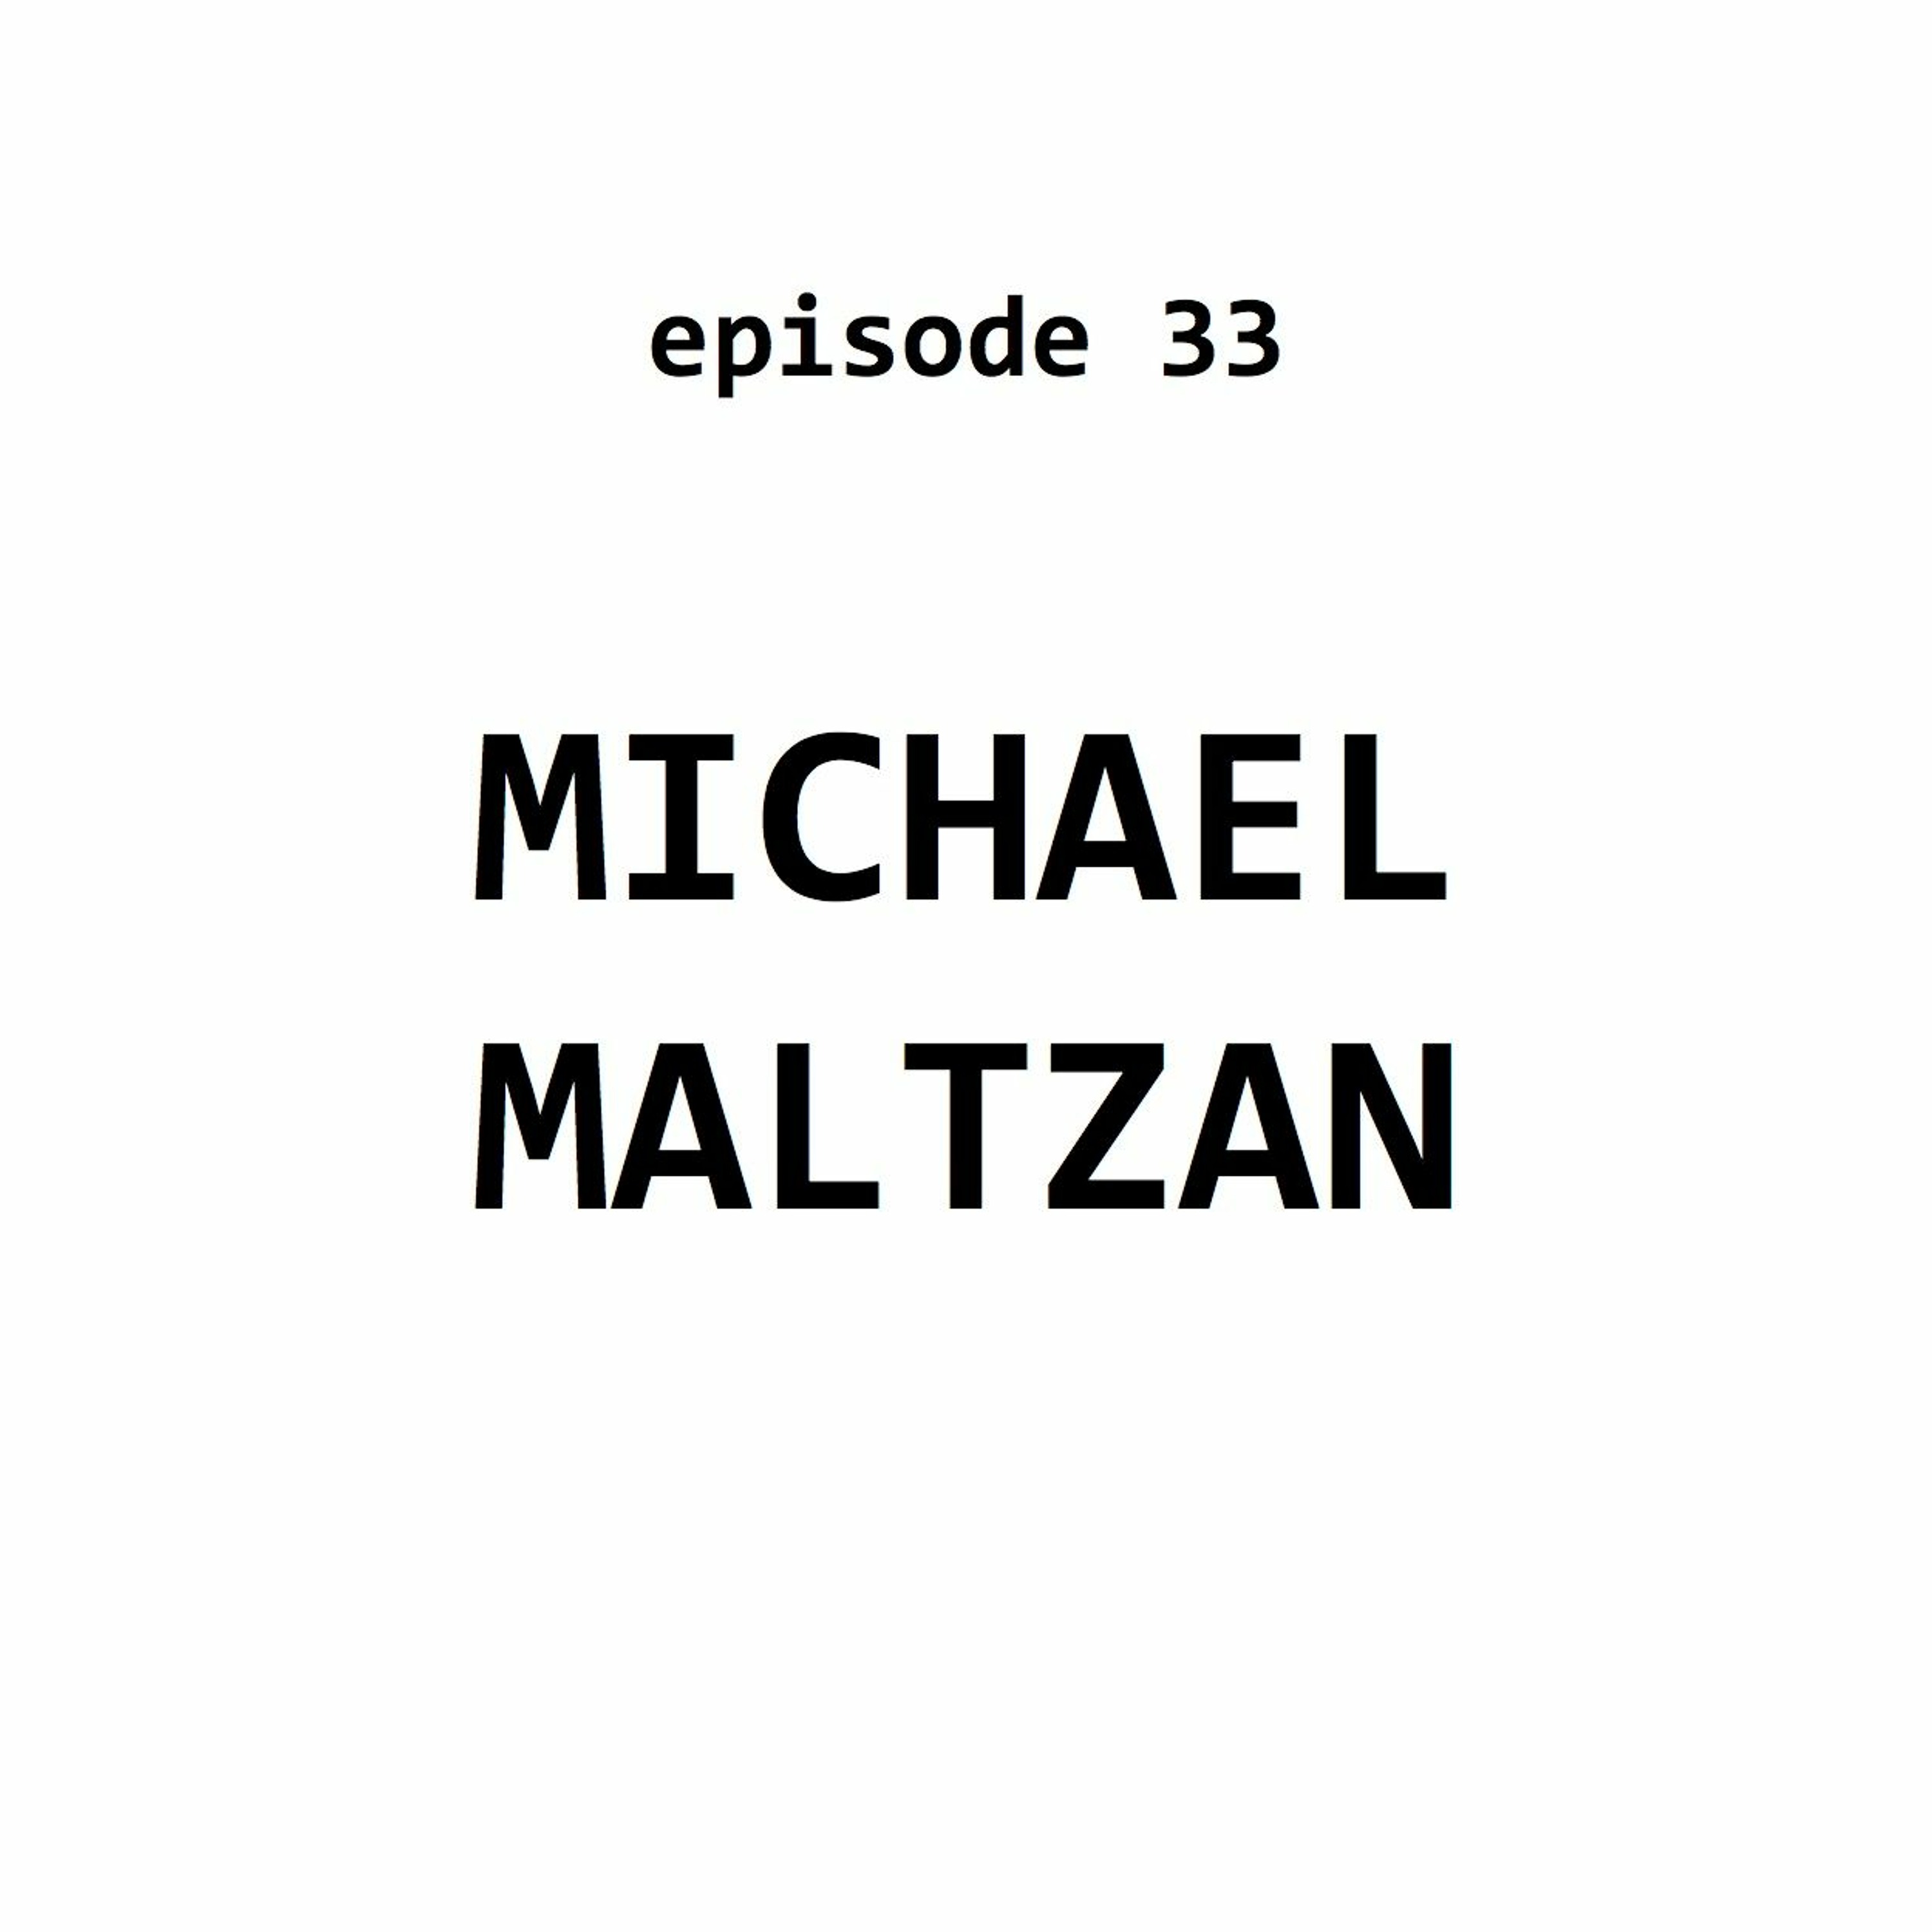 Ep 33: Michael Maltzan